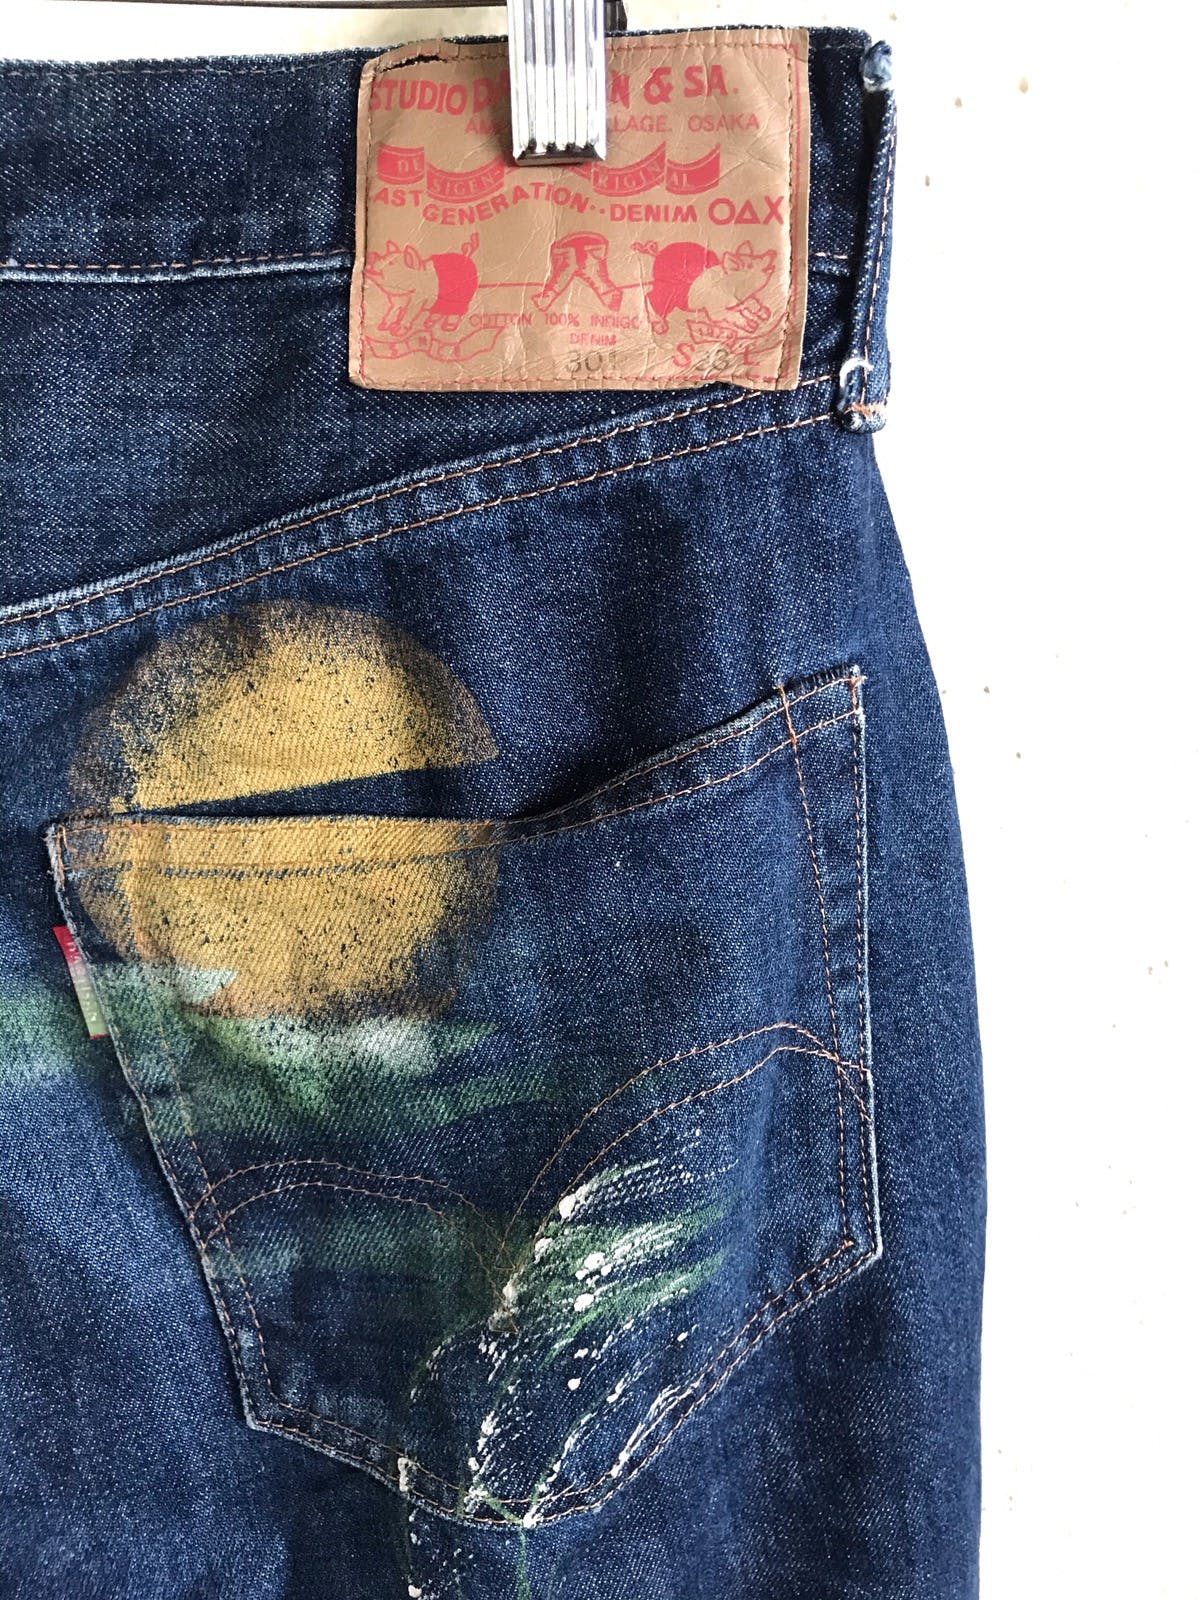 RARE🔥Studio D’ Artisan SD 301 Back Printed Jeans - 3